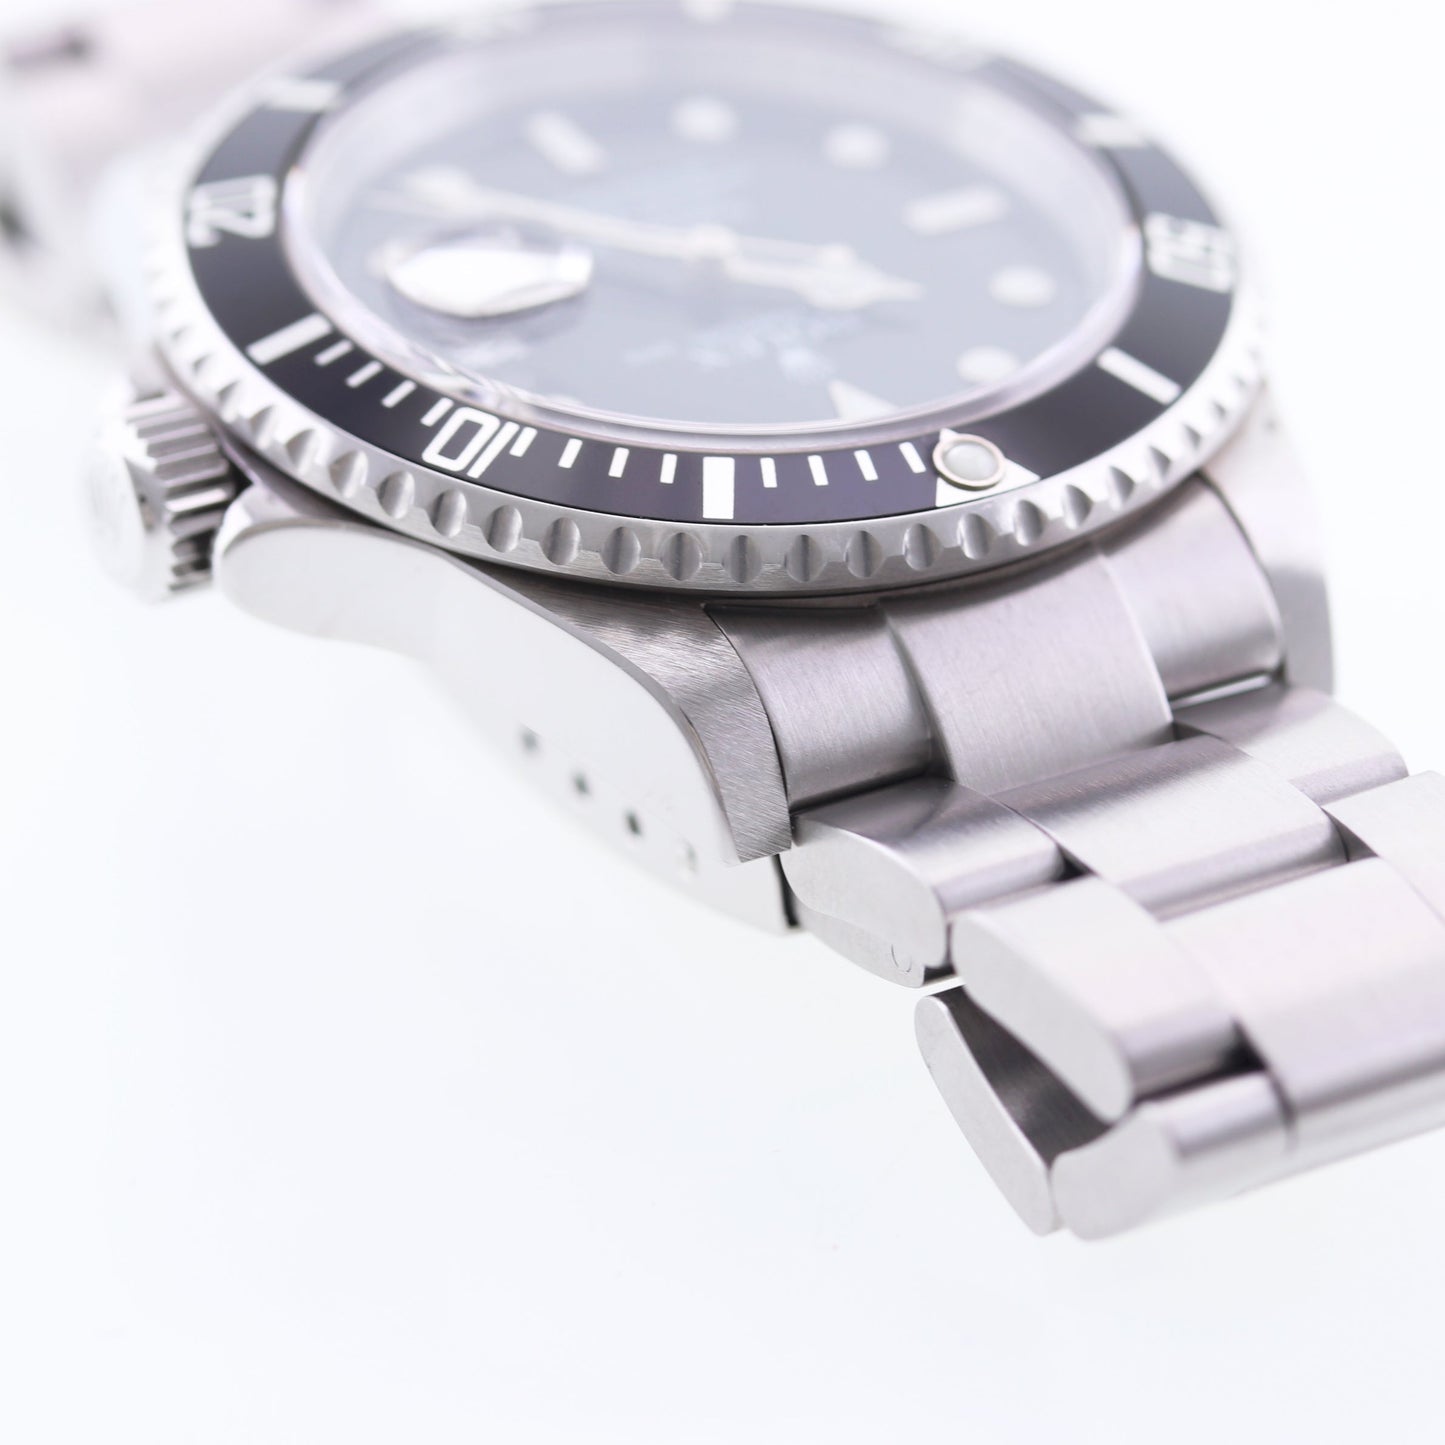 MINT PAPERS 2008 Rolex Submariner Date 16610 Steel Black Rehaut Watch Box